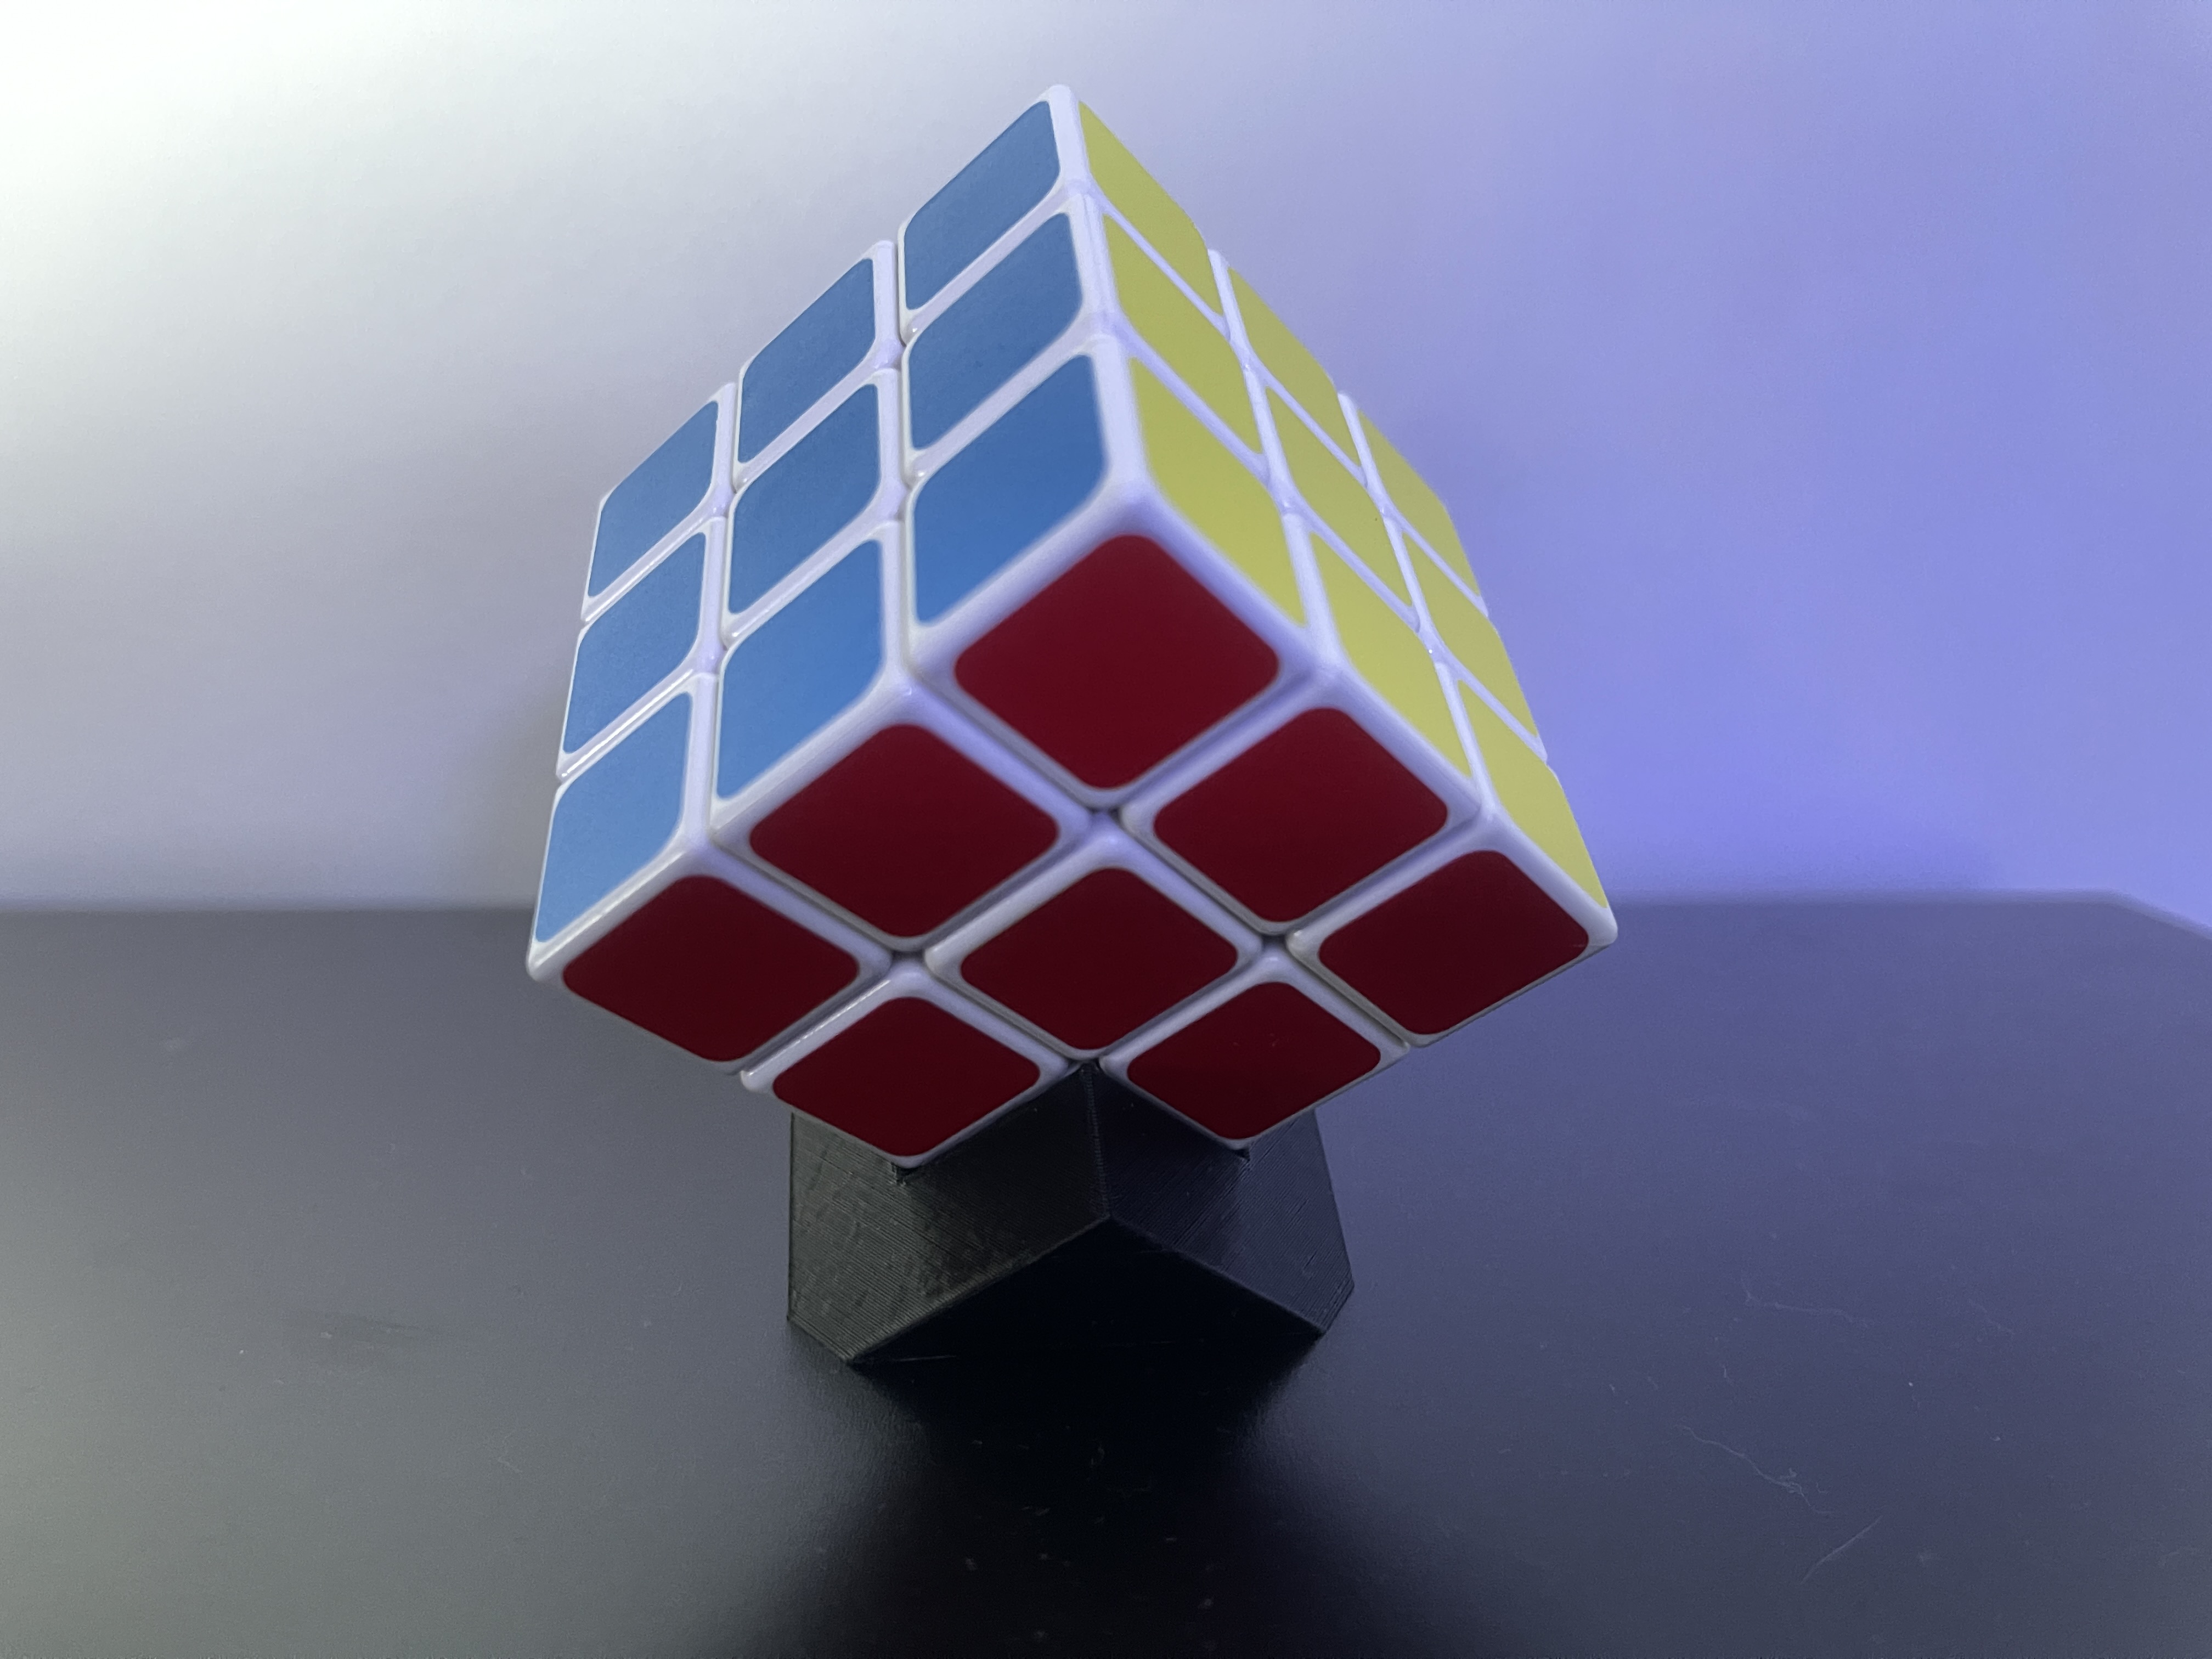 Rubiks cube holder/stand